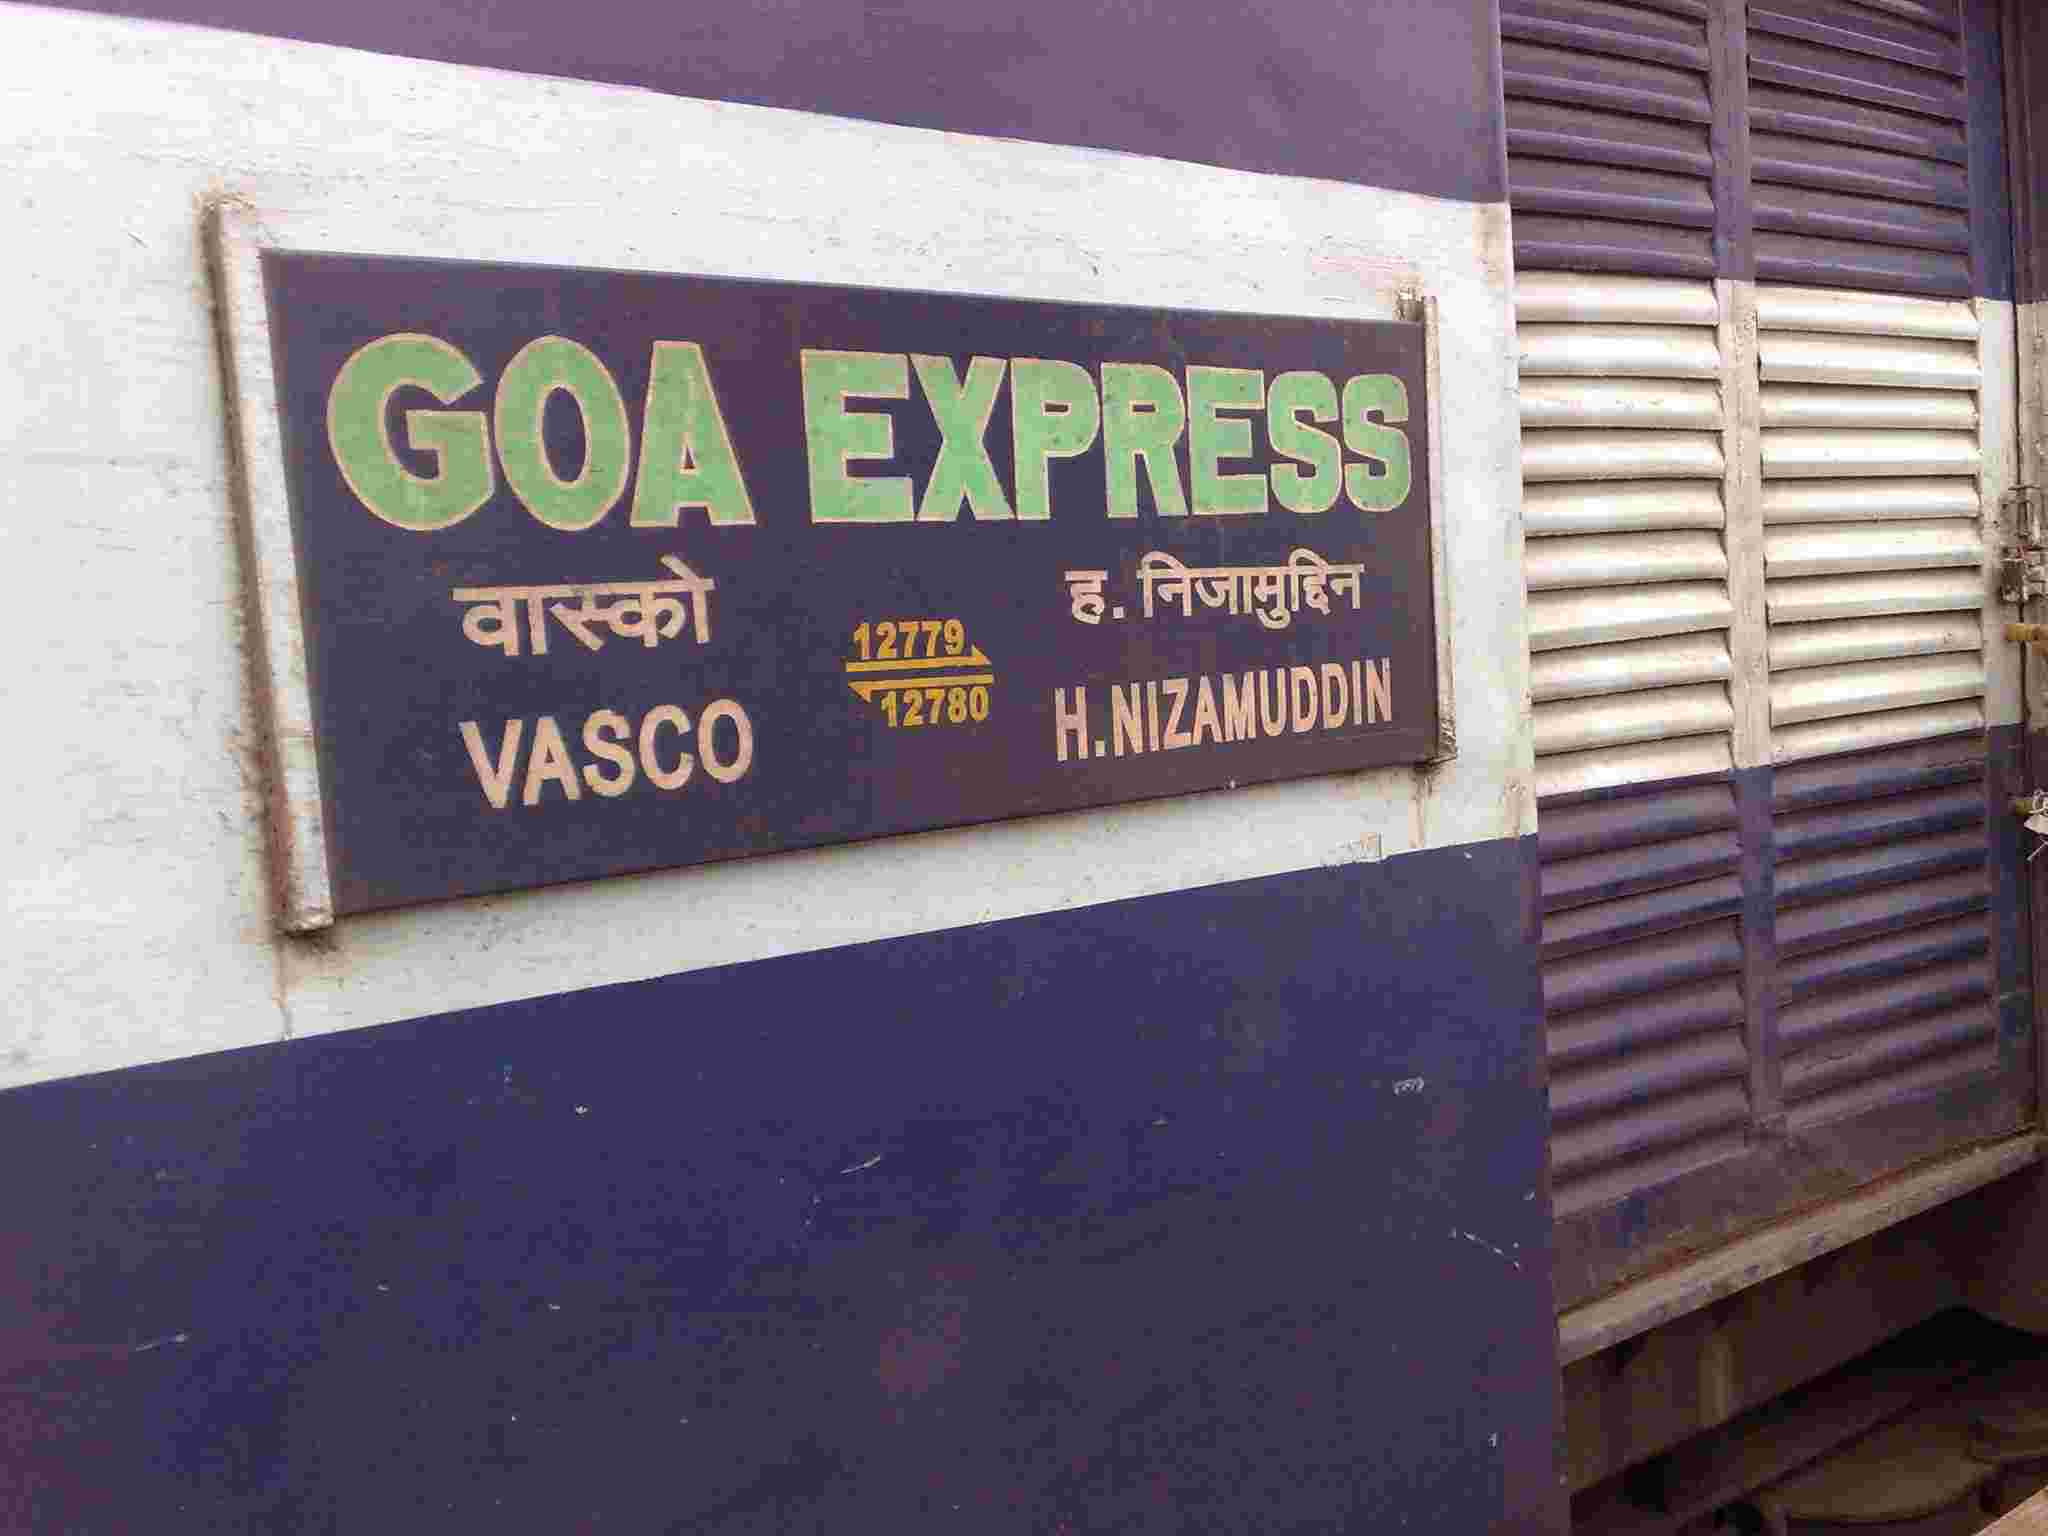 Goa express file pic 